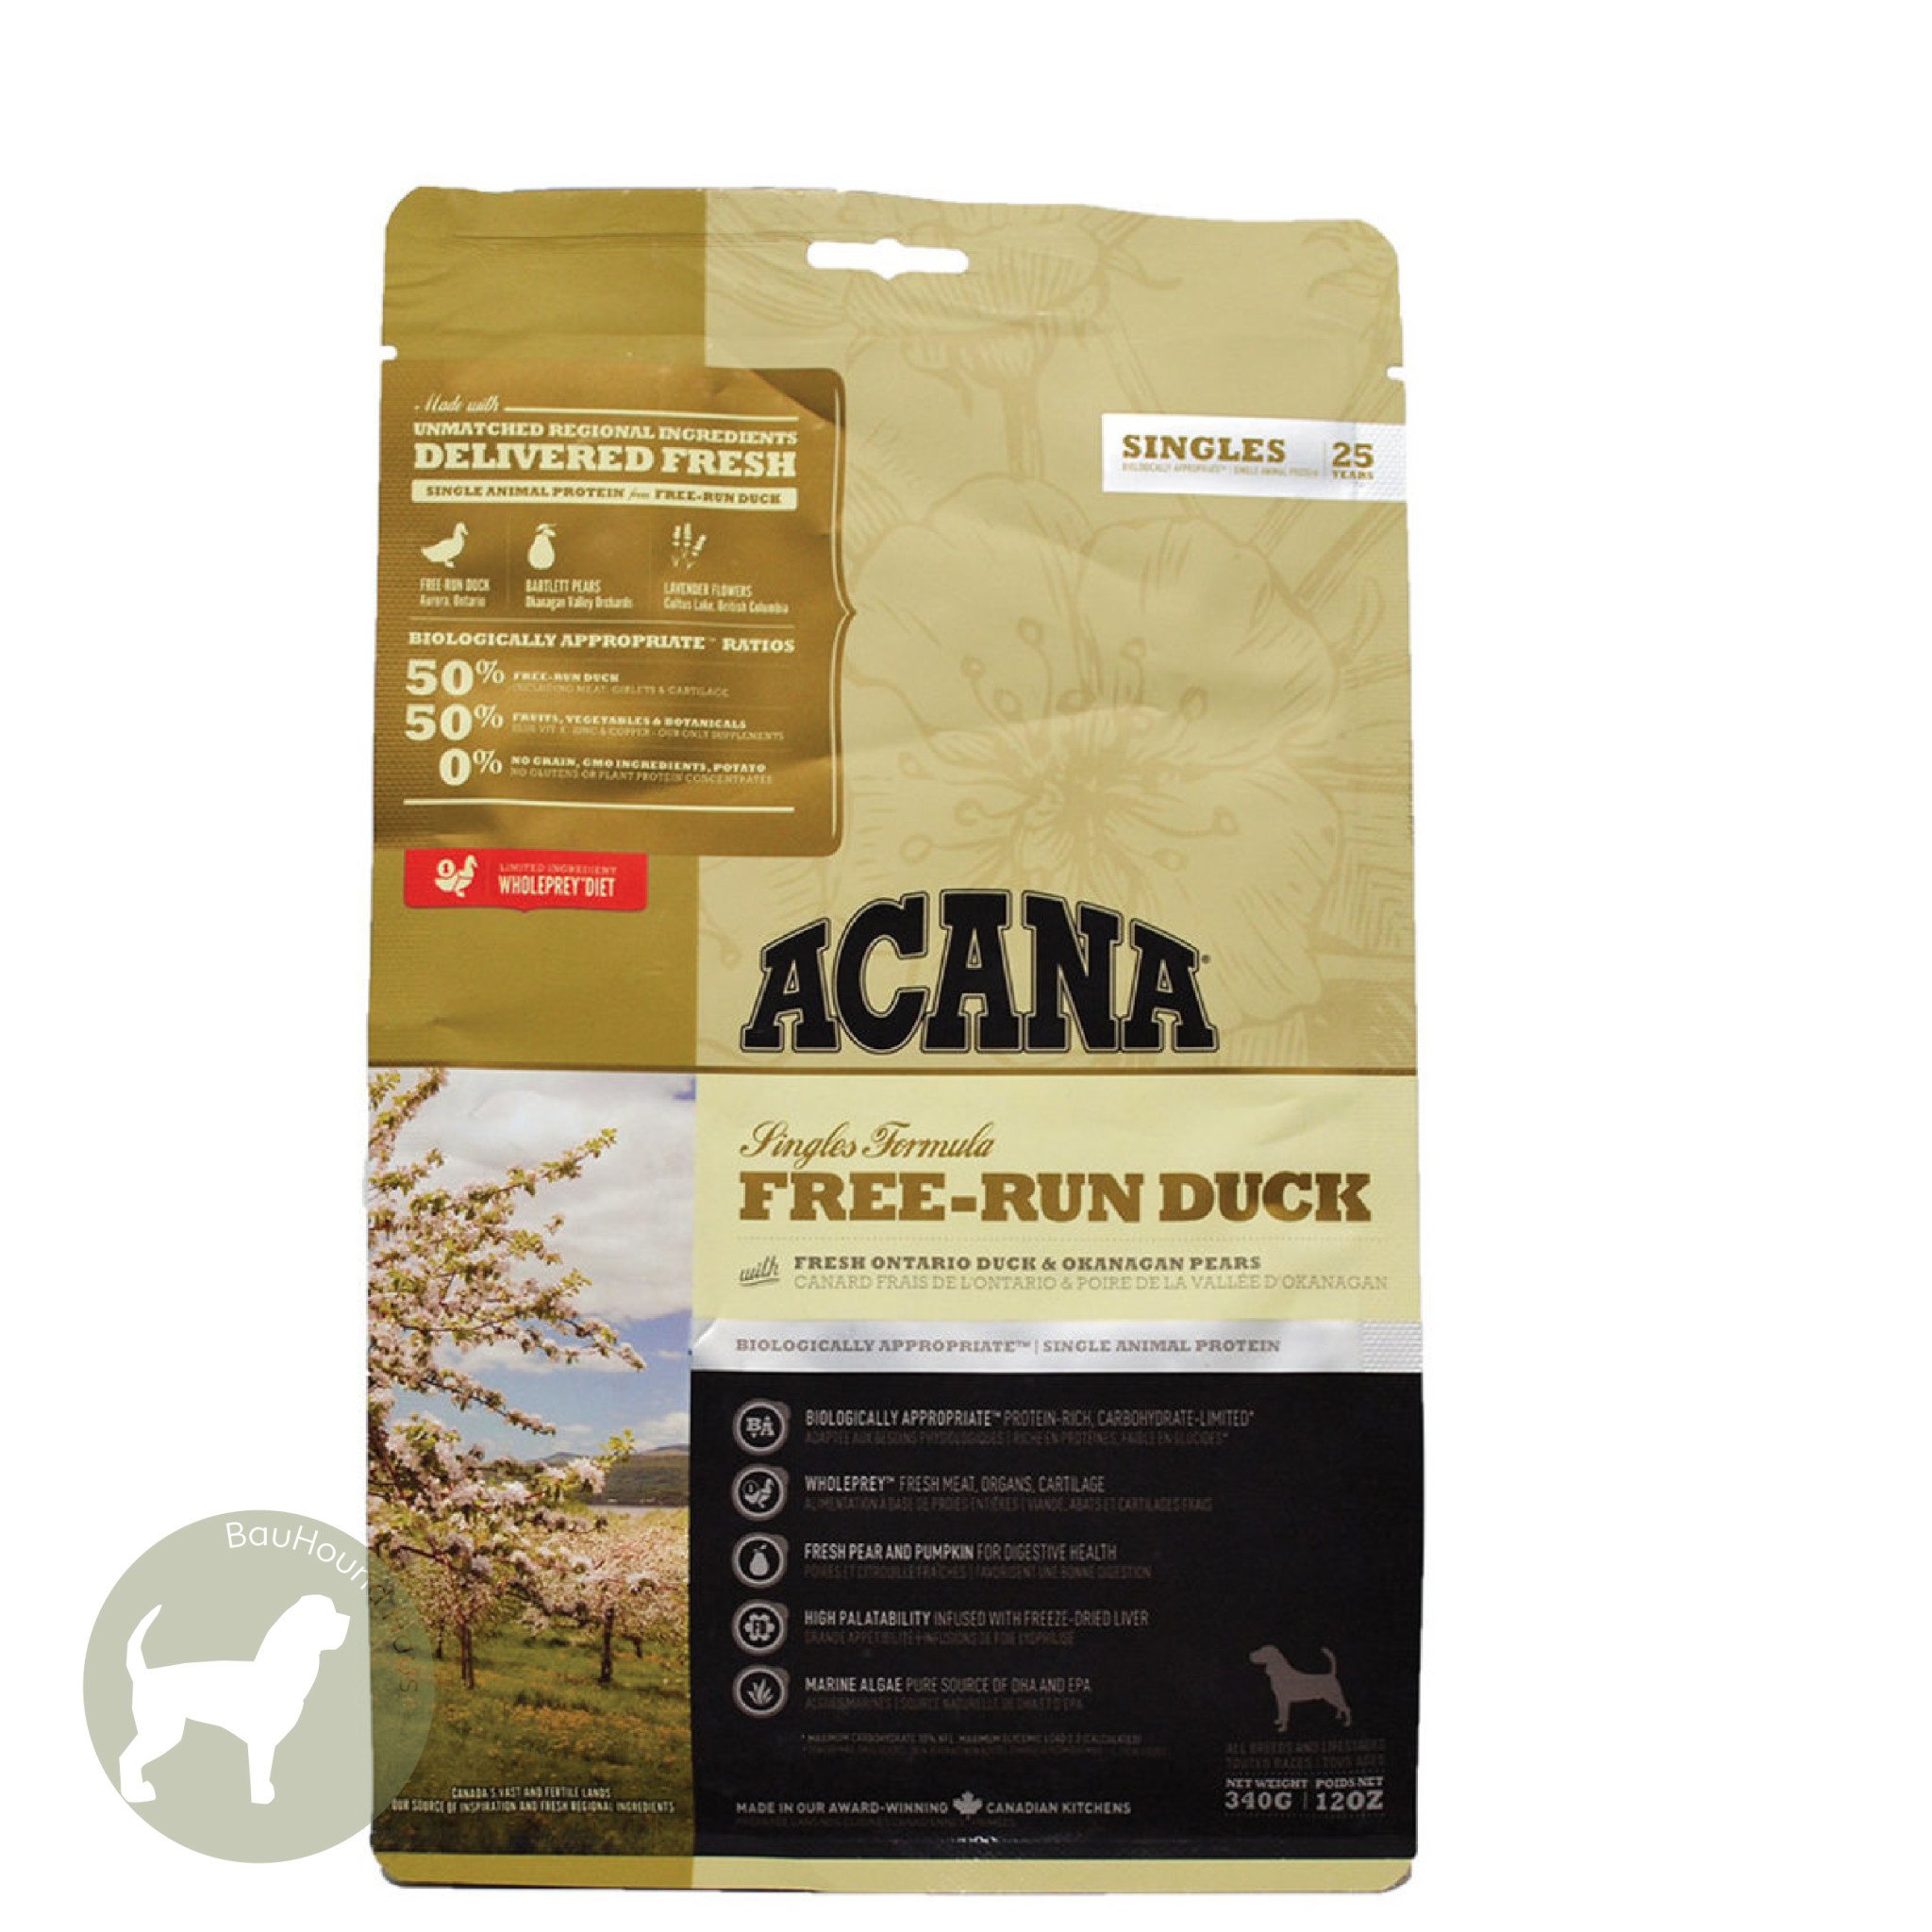 Acana Acana SINGLES Grain-Free  Duck & Pear Recipe Kibble, 10.8kg